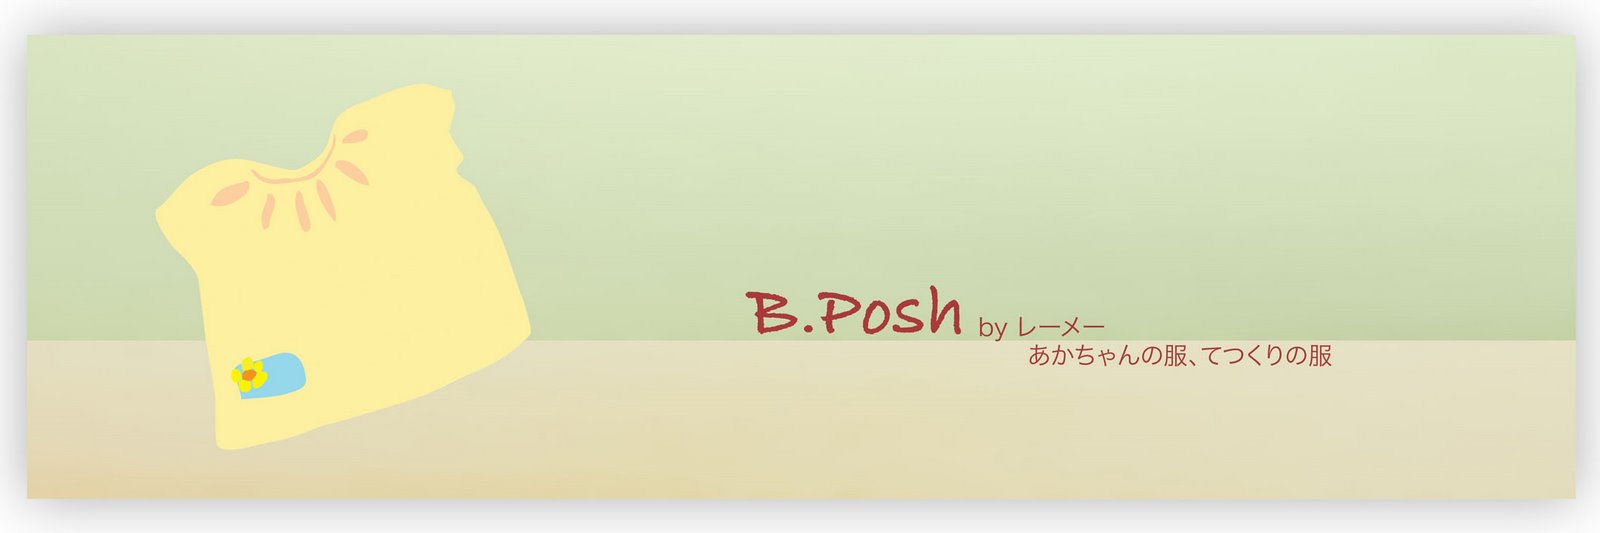 B.Posh